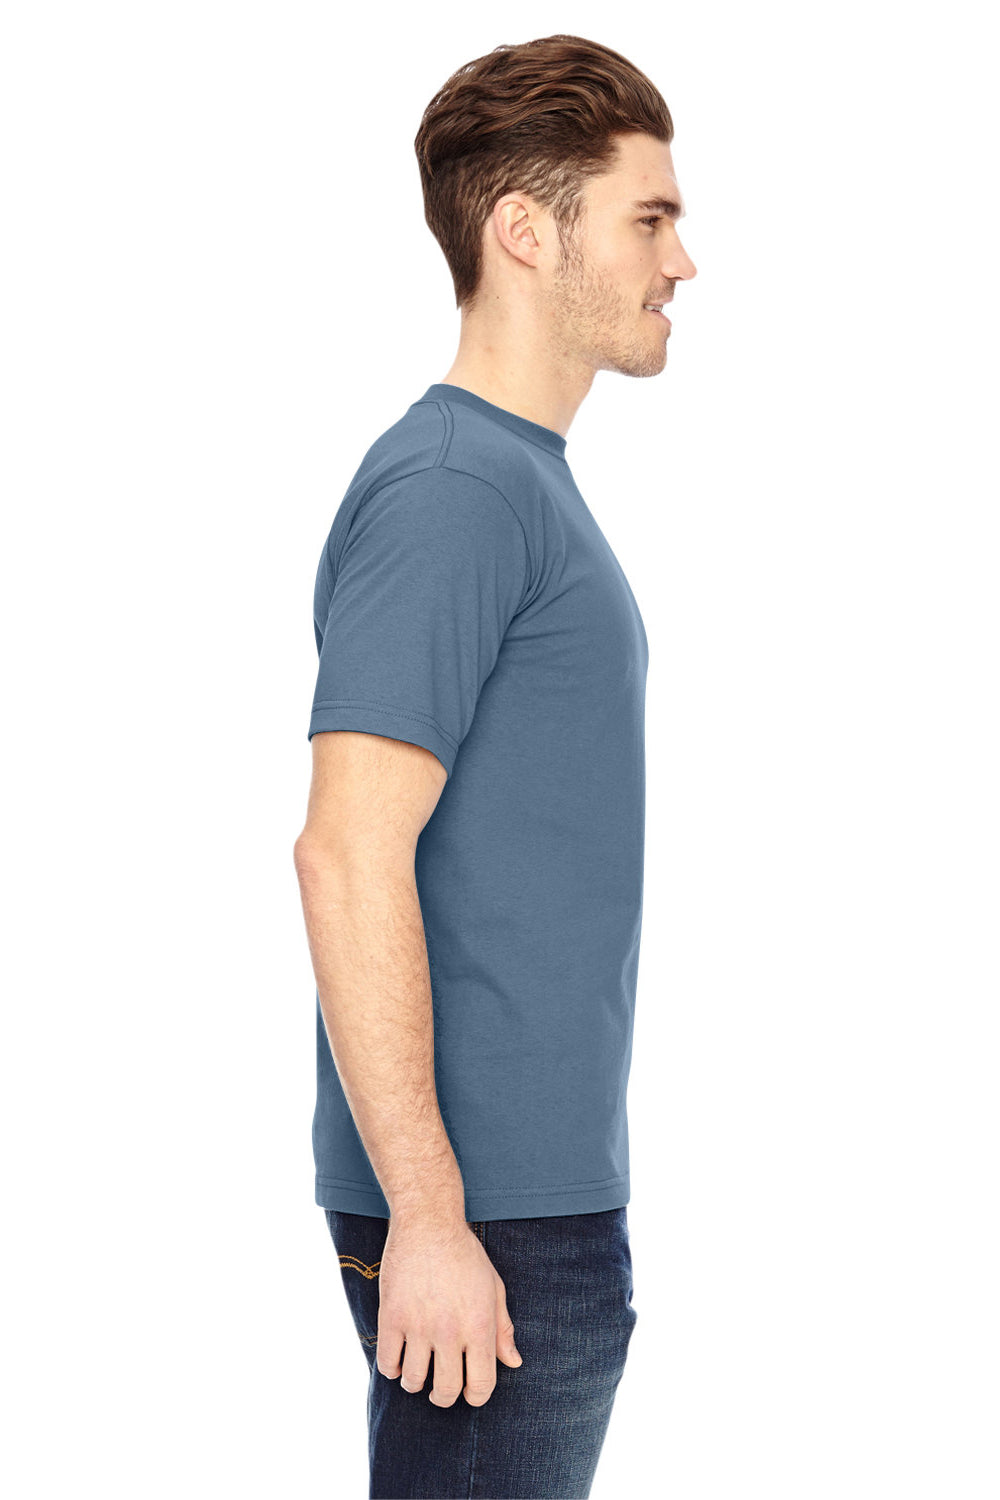 Bayside BA5100 Mens USA Made Short Sleeve Crewneck T-Shirt Denim Blue Model Side